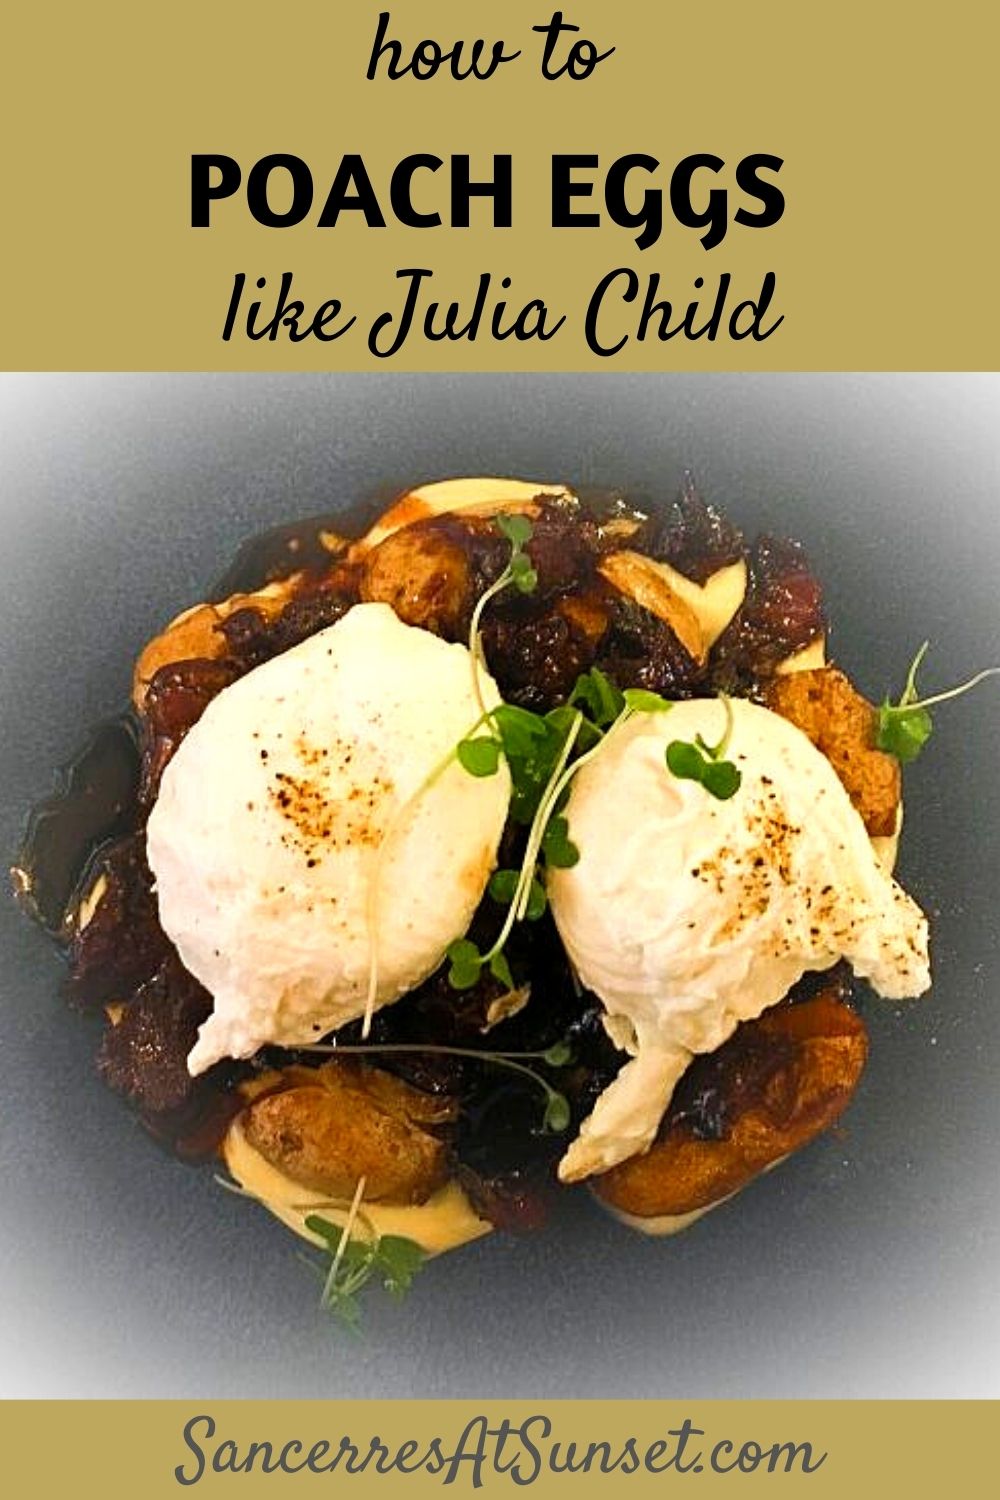 How to Poach Eggs like Julia Child